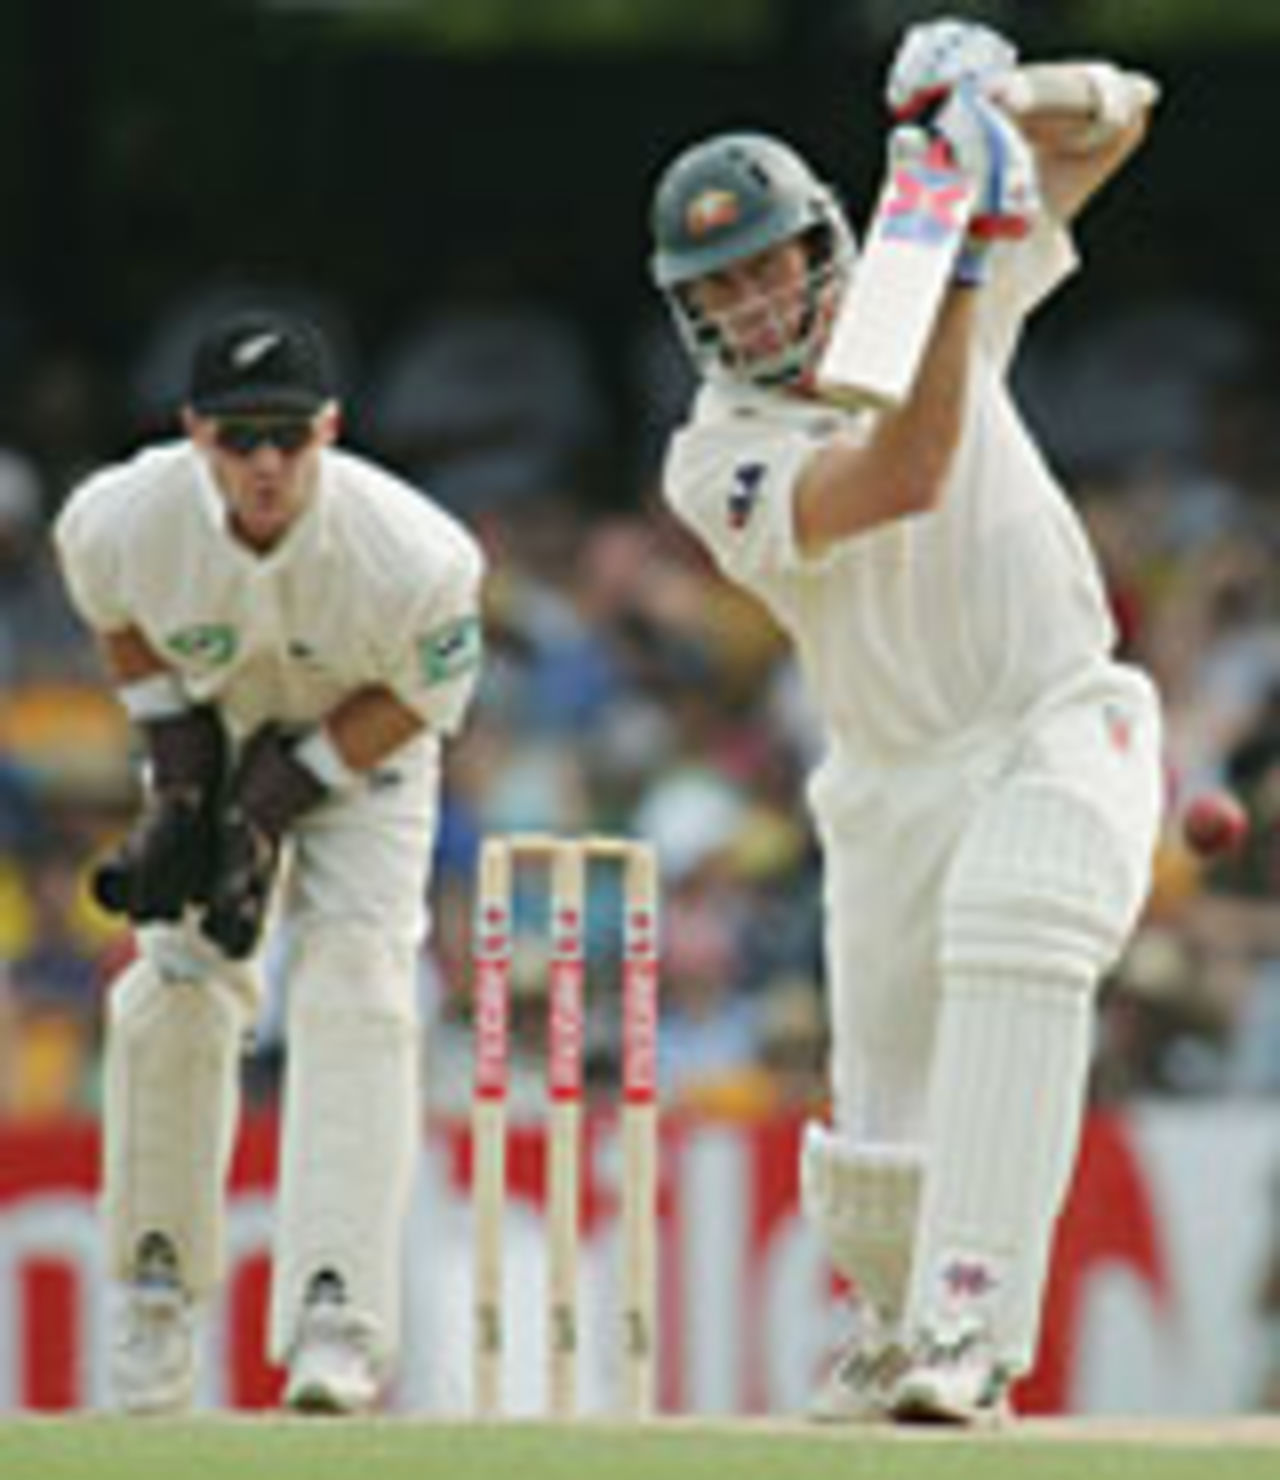 Glenn McGrath drives on his way to fifty, Australia v New Zealand, 1st Test, Brisbane, 3rd Day, November 20 2004